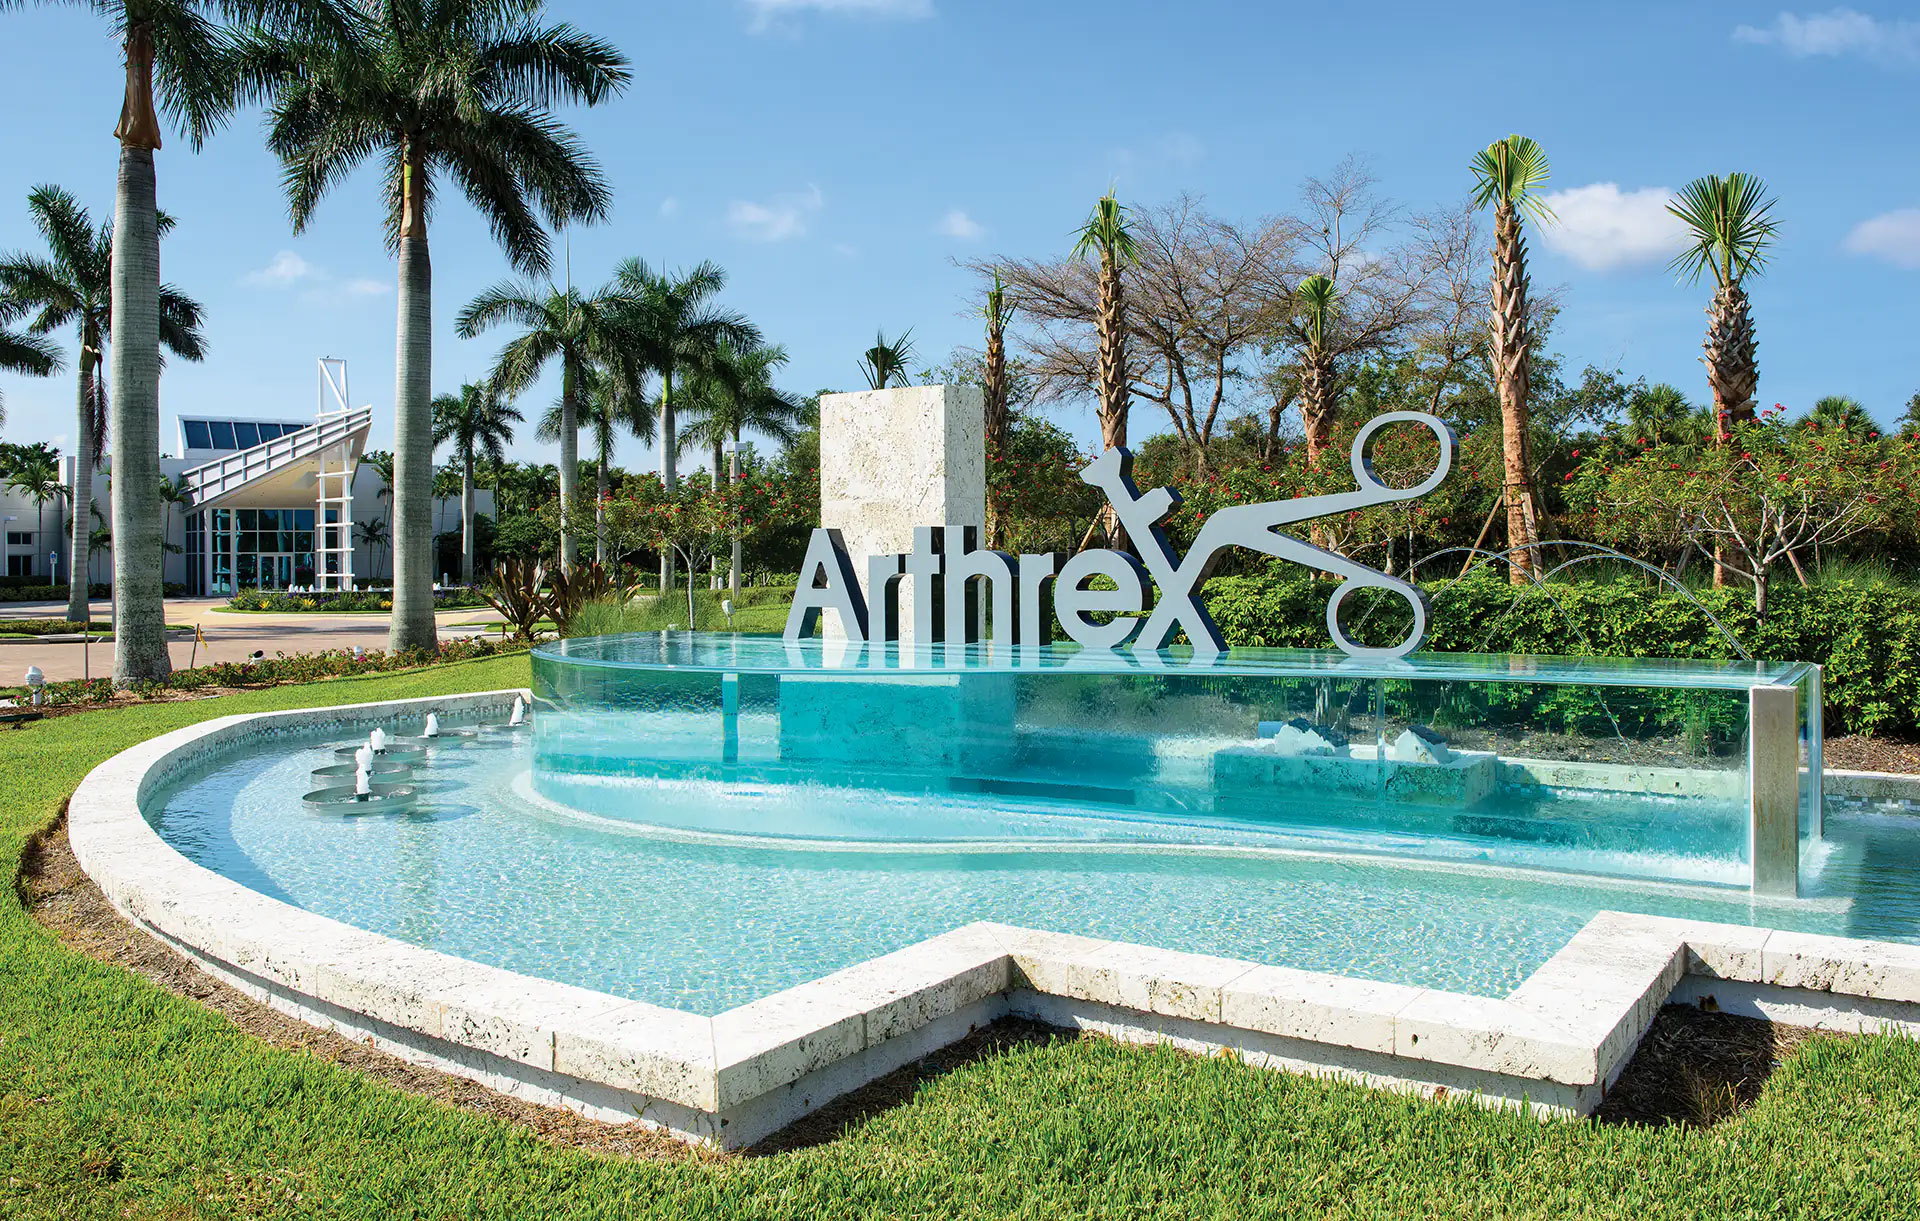 Arthrex Headquarters in Florida